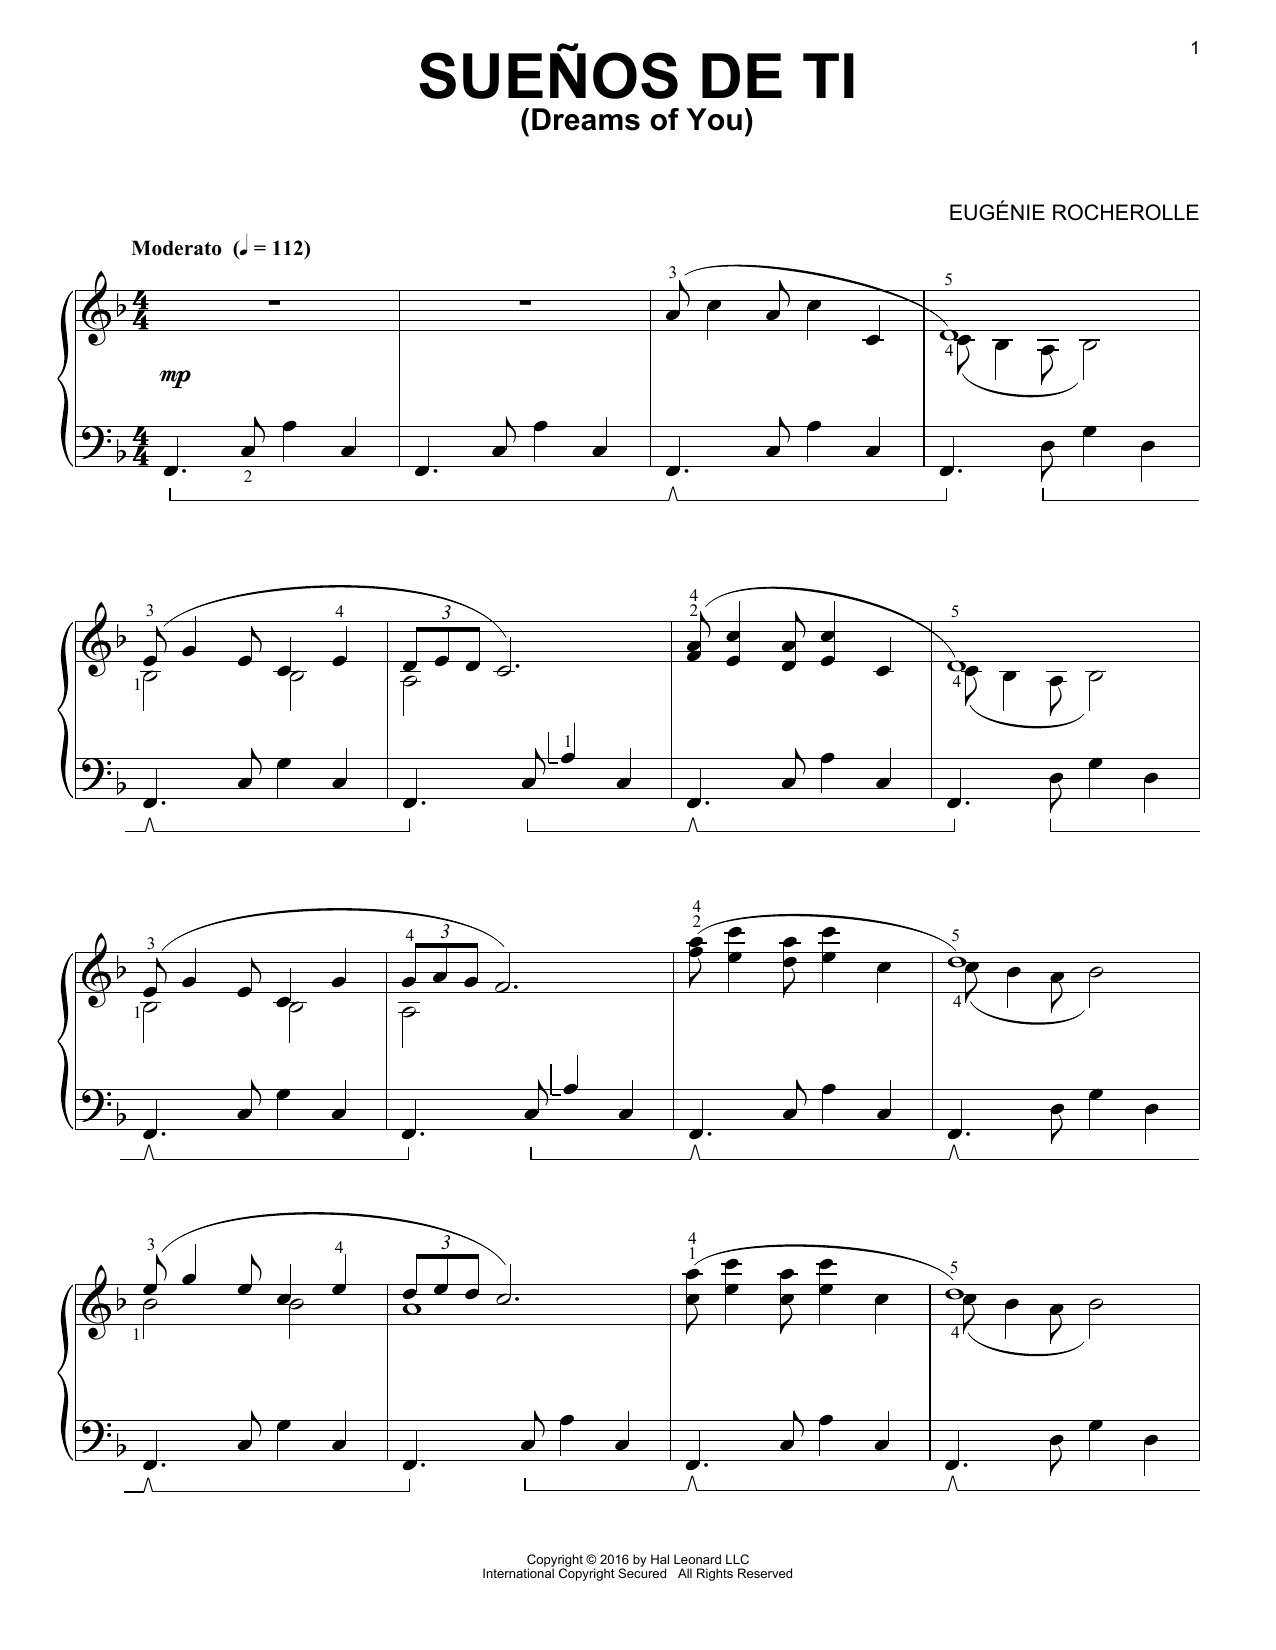 Eugénie Rocherolle Suenos de Ti Sheet Music Notes & Chords for Piano - Download or Print PDF